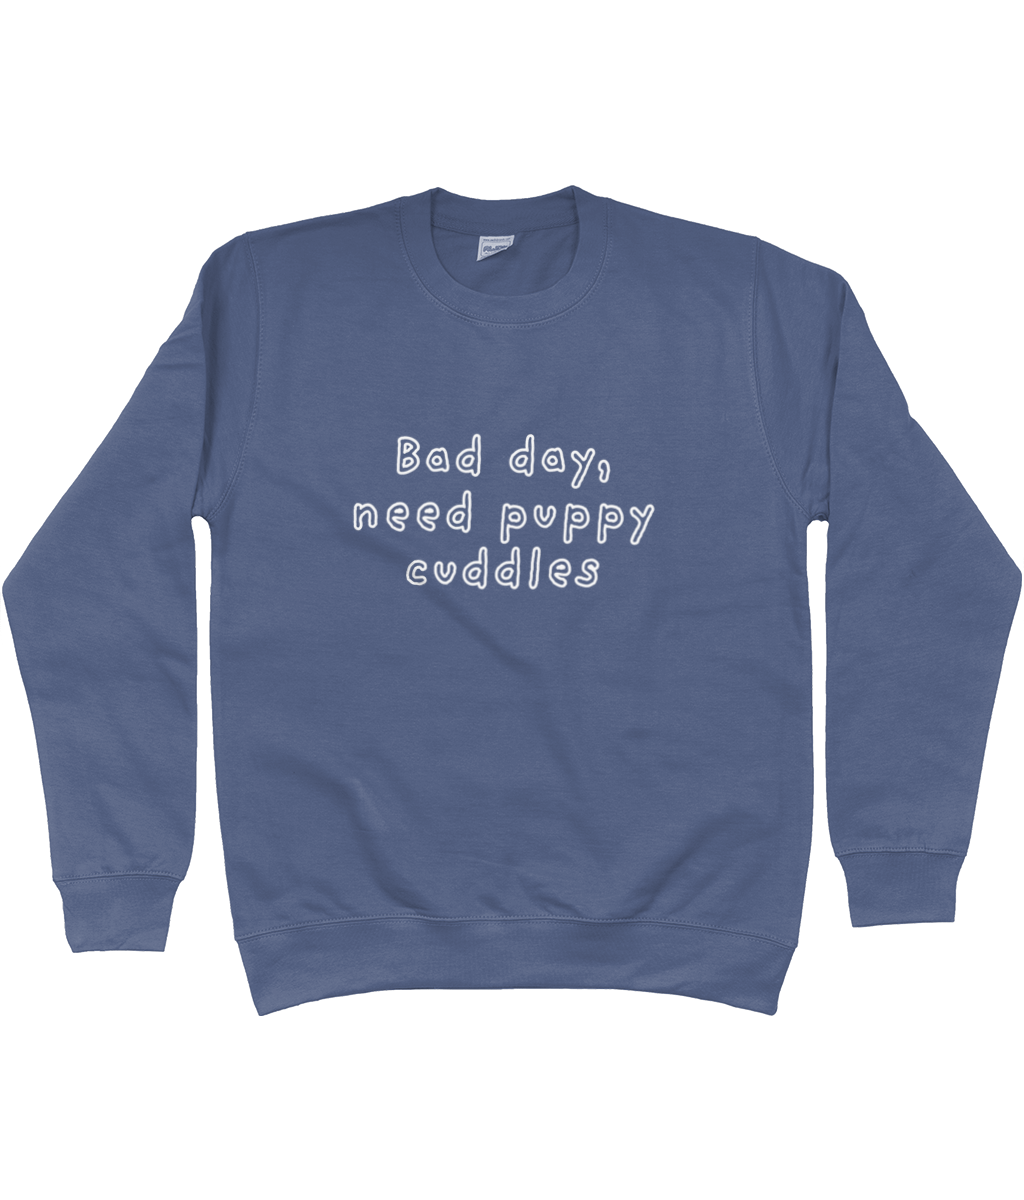 bad day, need puppy cuddles sweatshirt